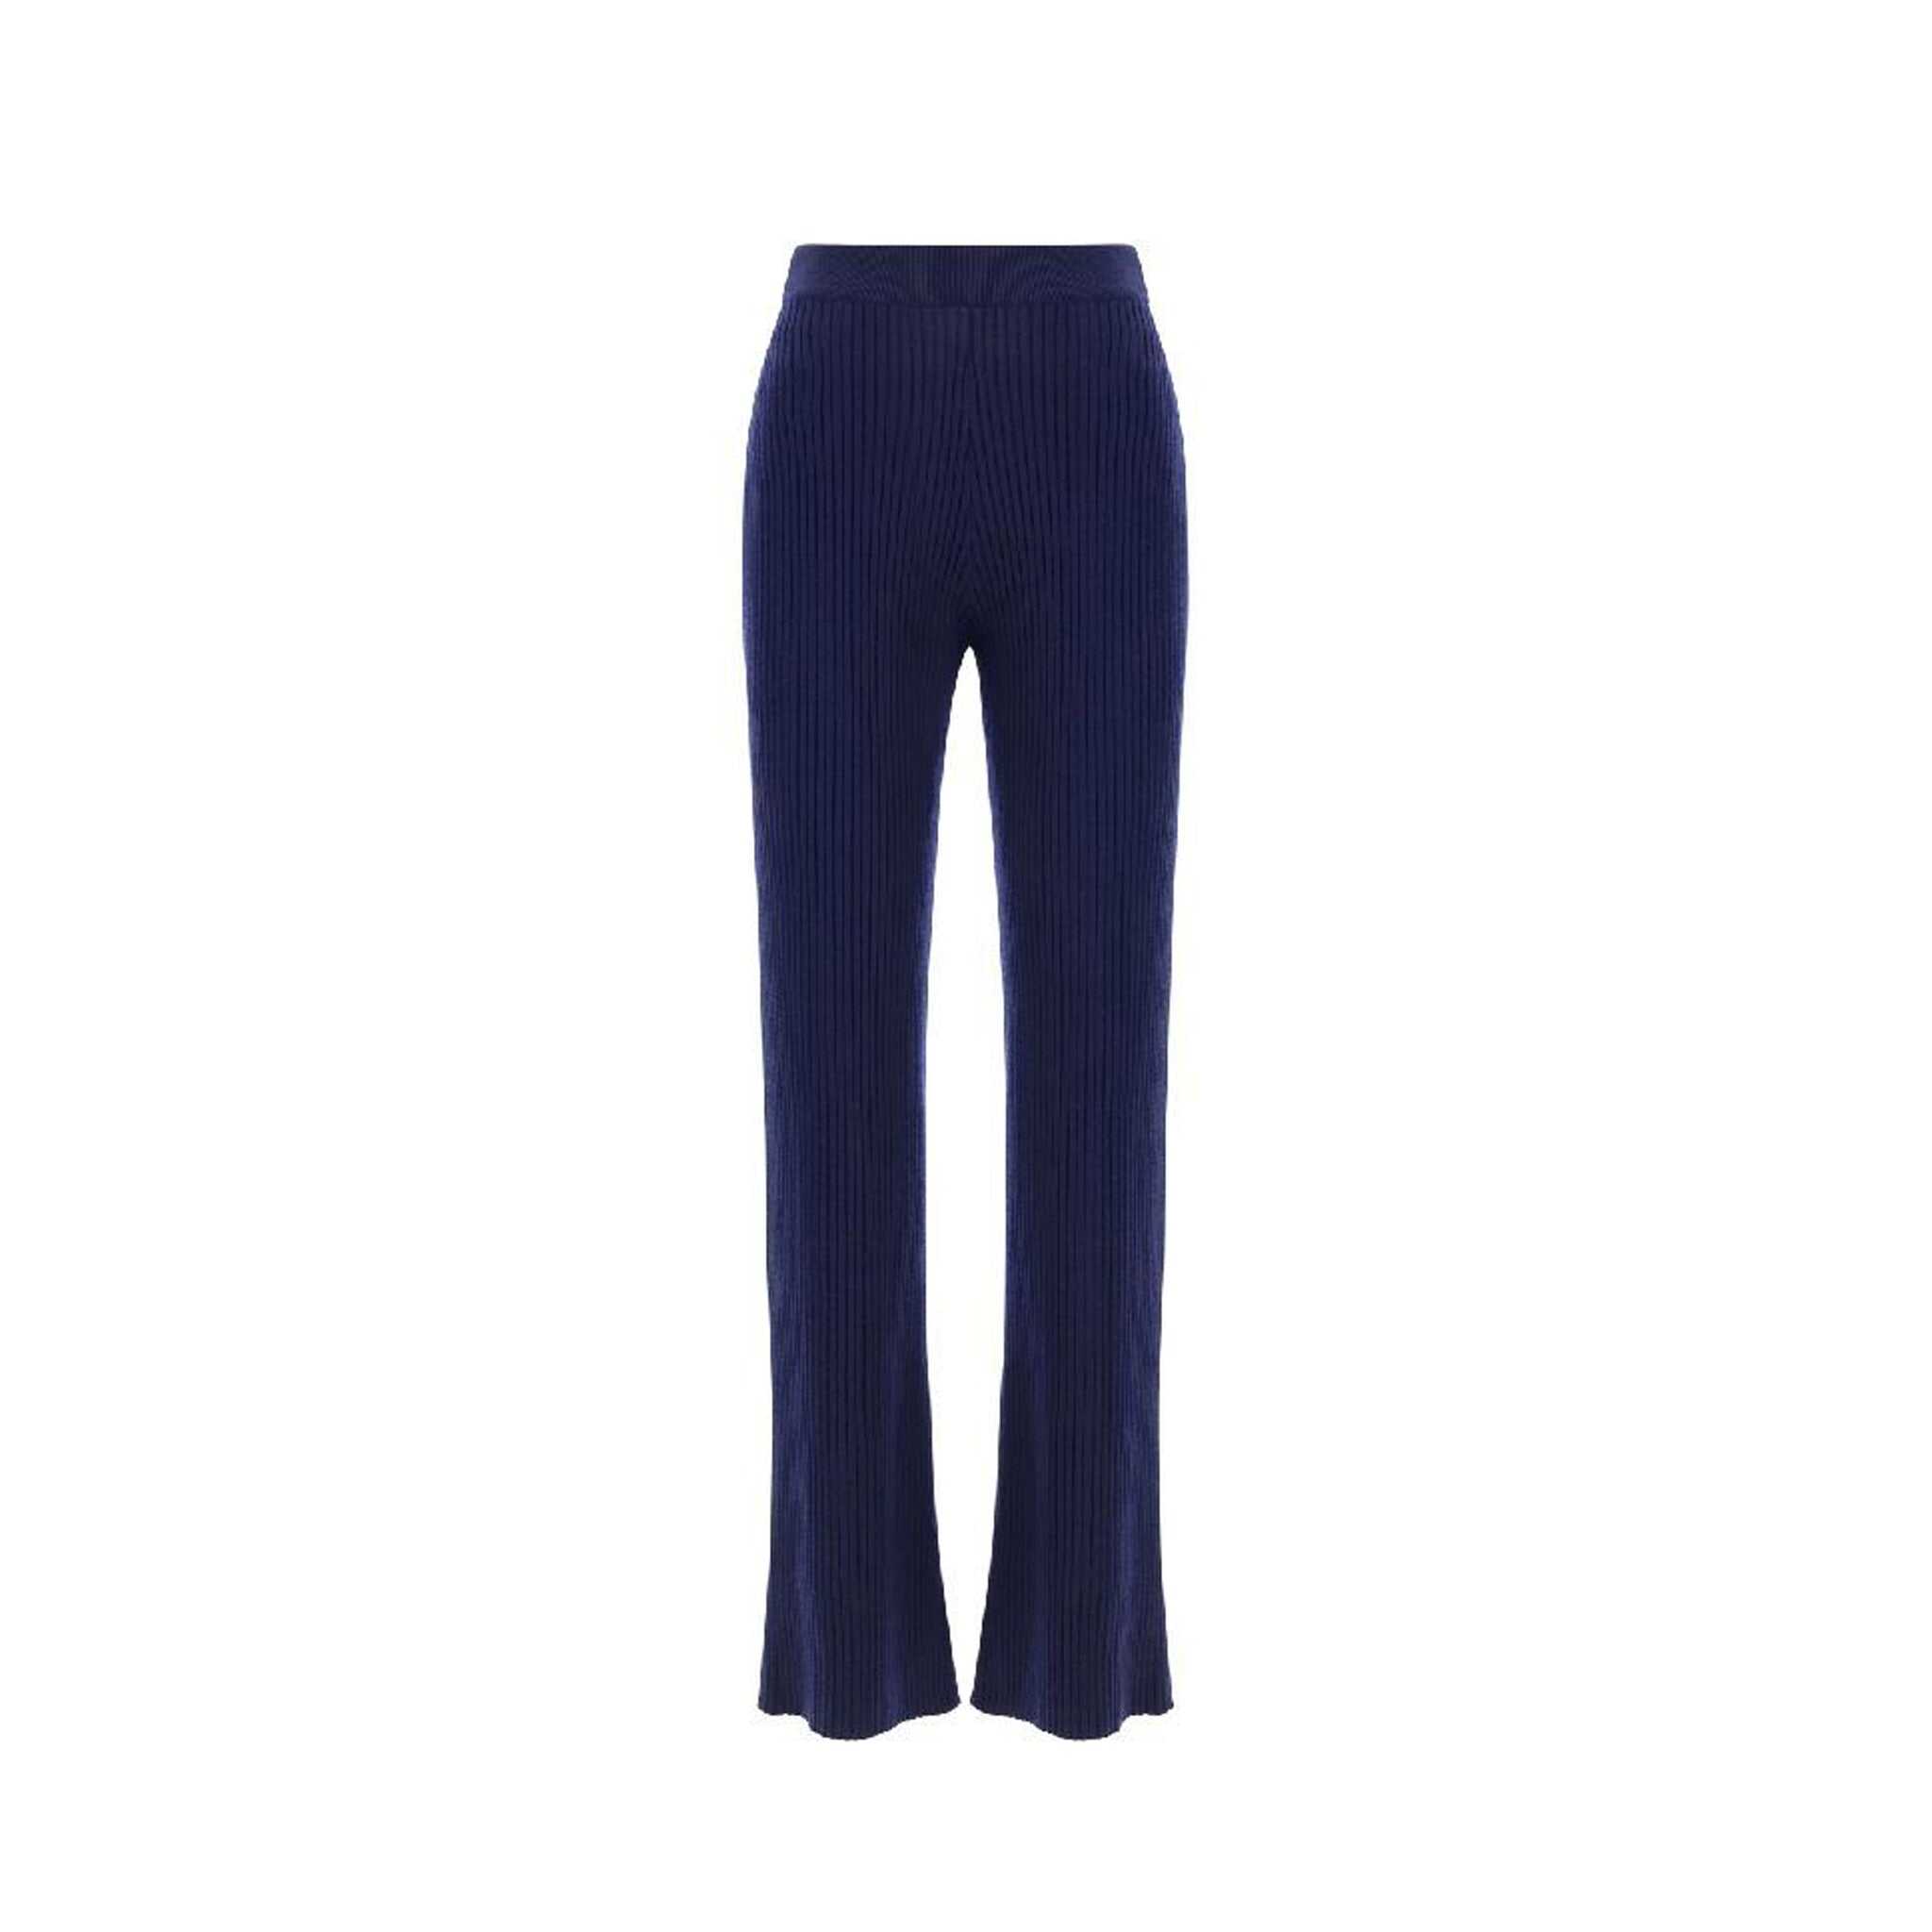 Chloe Chloe\' Wool And Cashmere Pants Blue